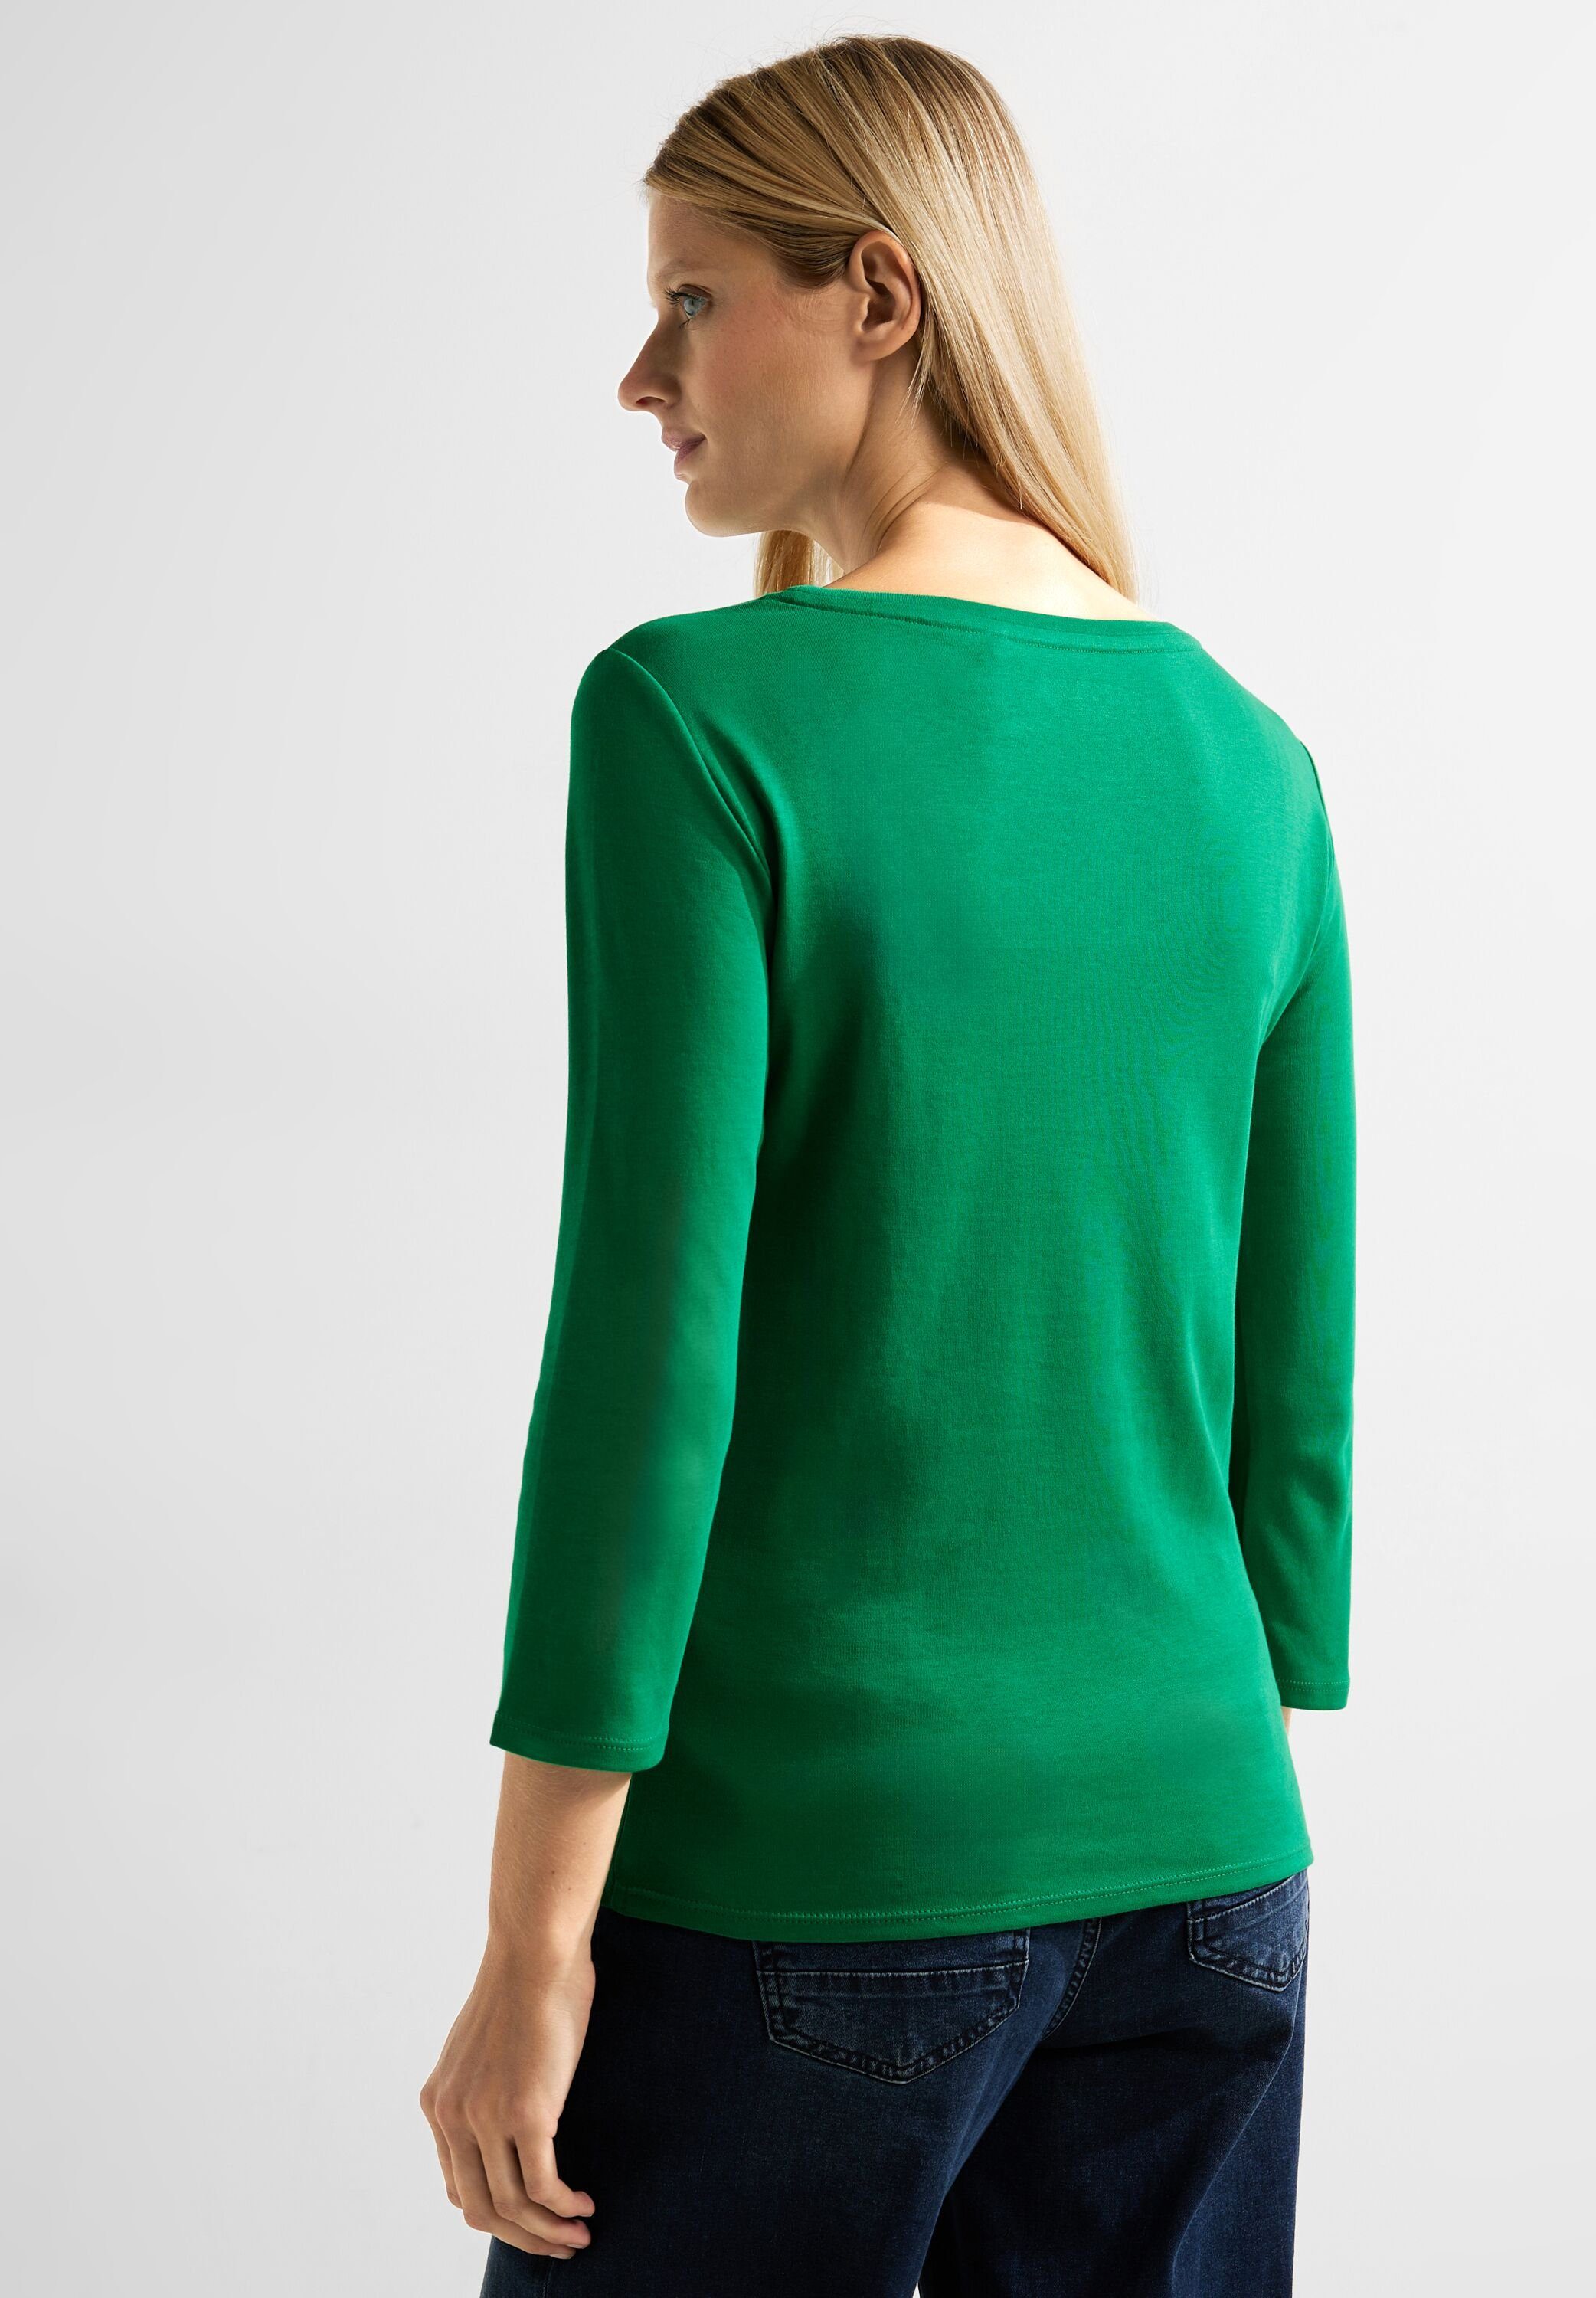 Cecil Unifarbe Unifarbe Basic in 3/4-Arm-Shirt easy Shirt green in